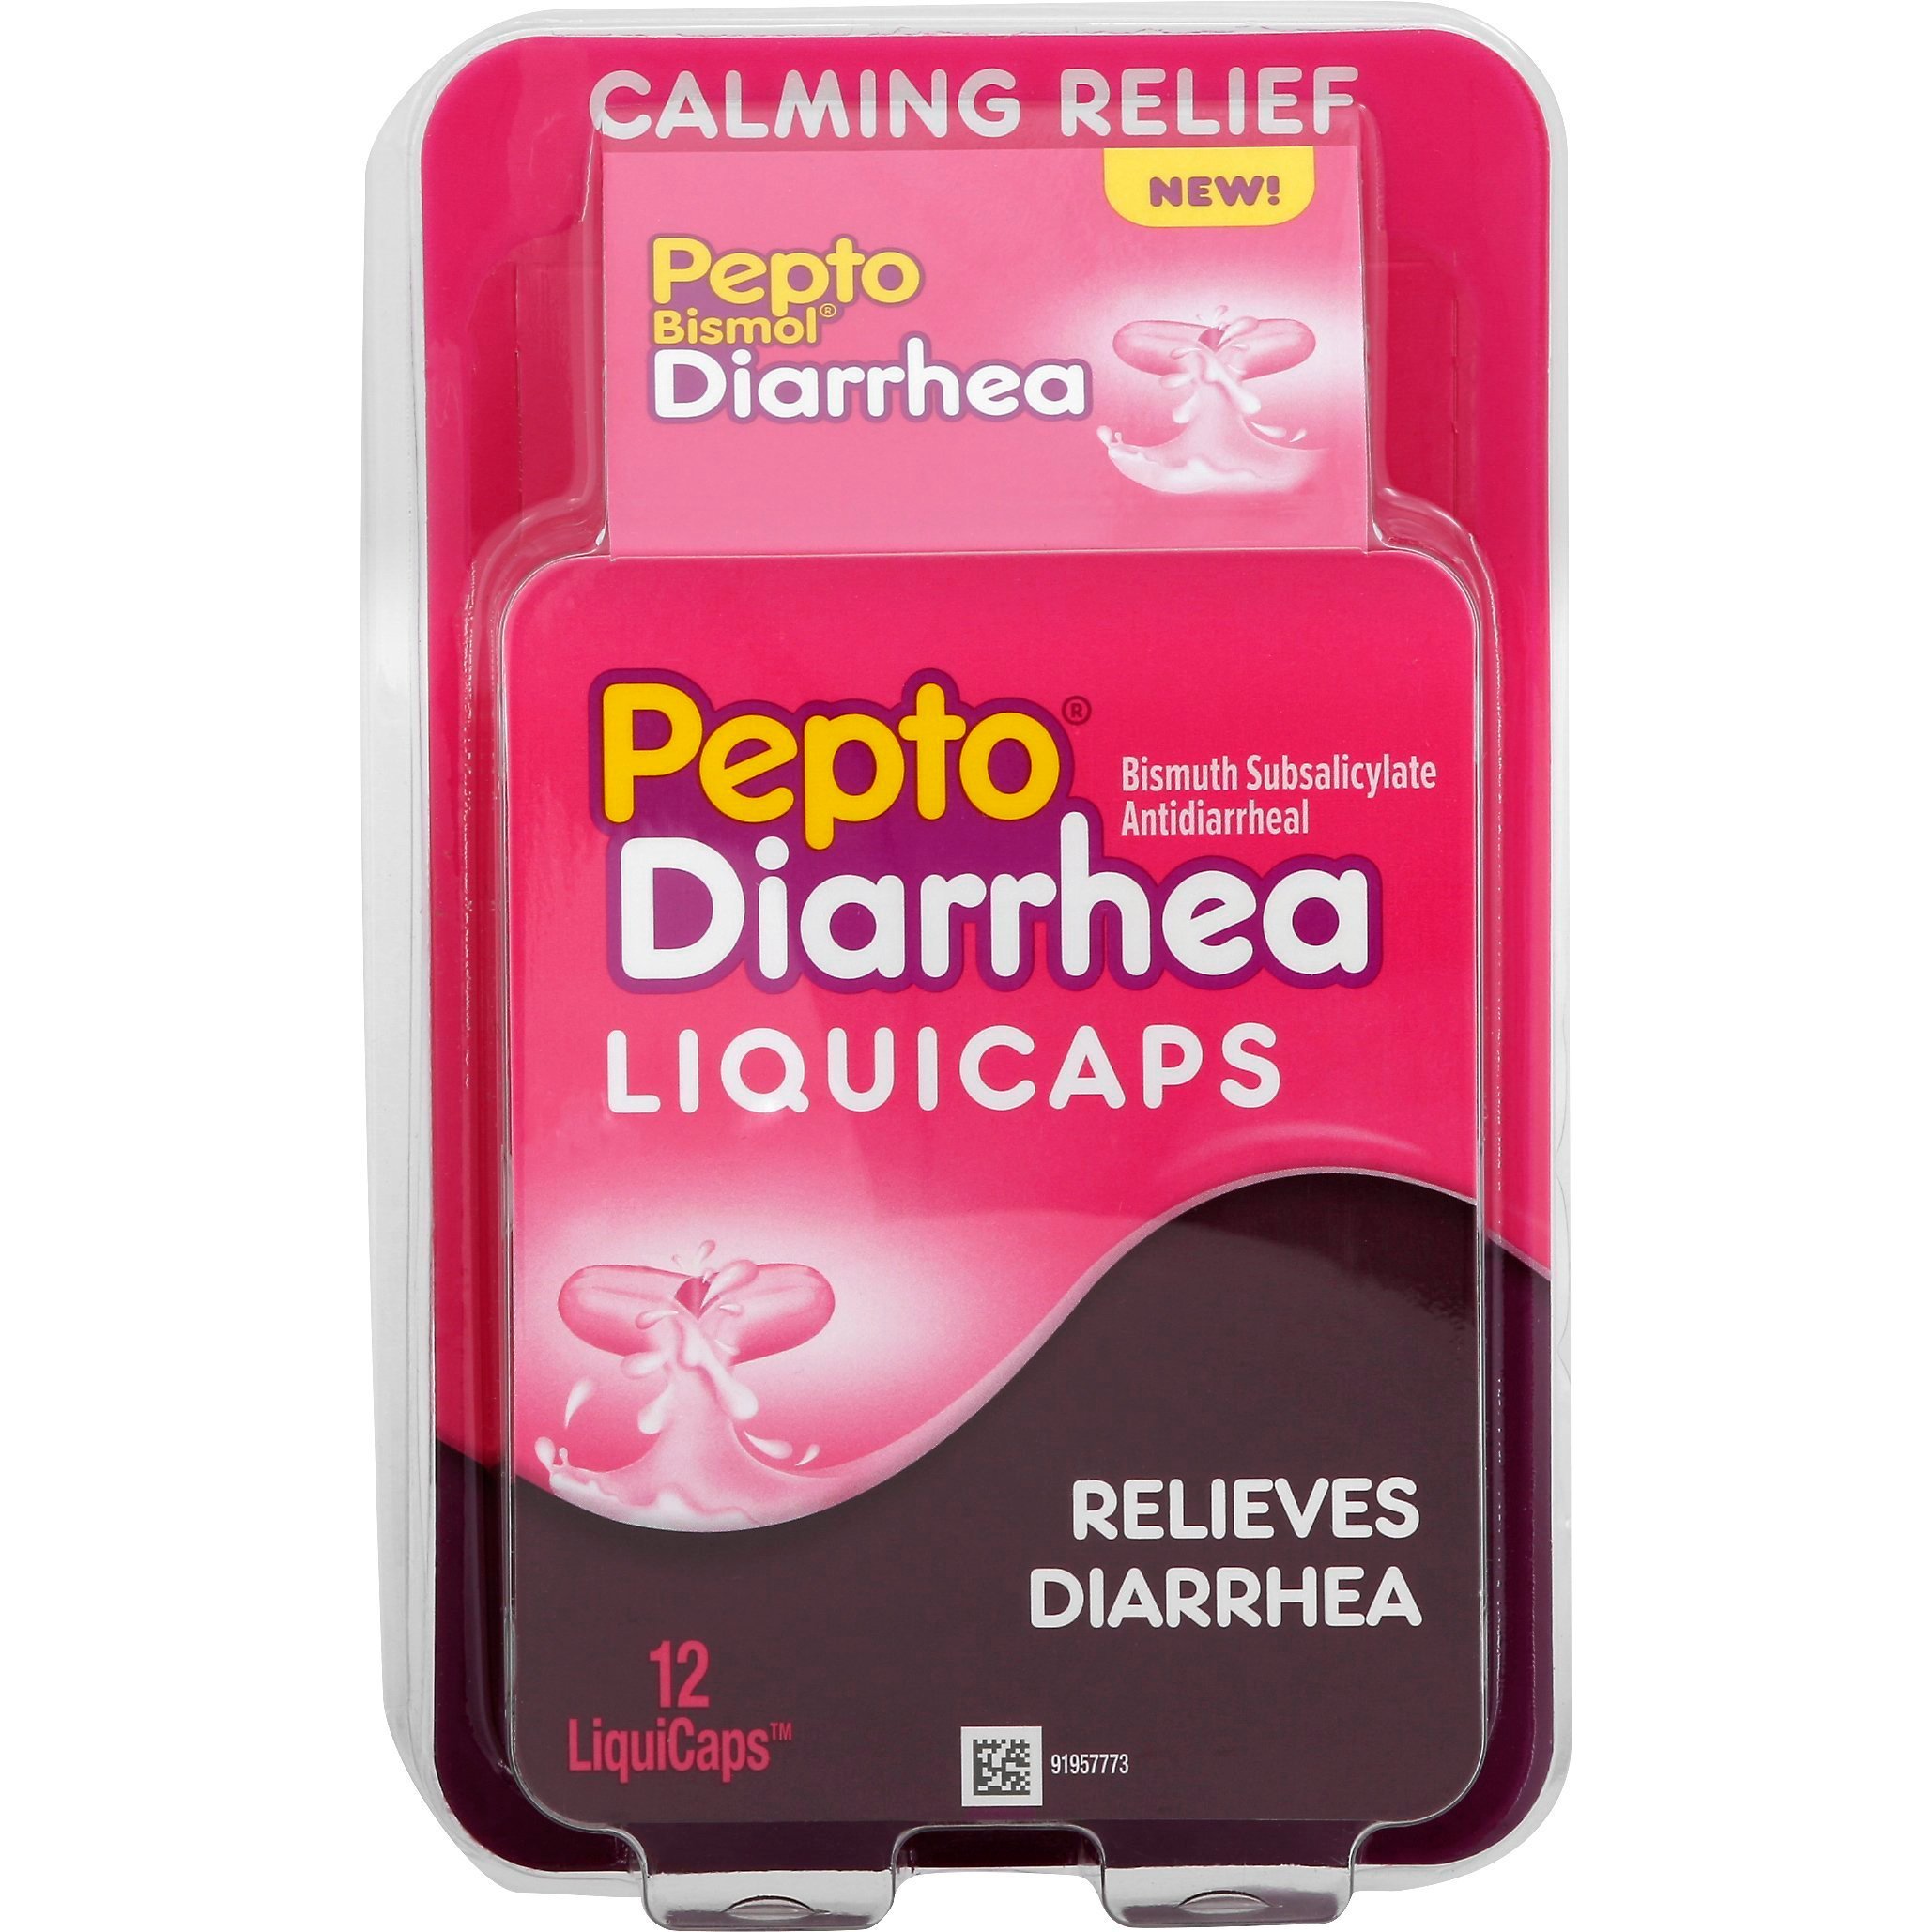 Pepto Bismol Diarrhea Liquicaps